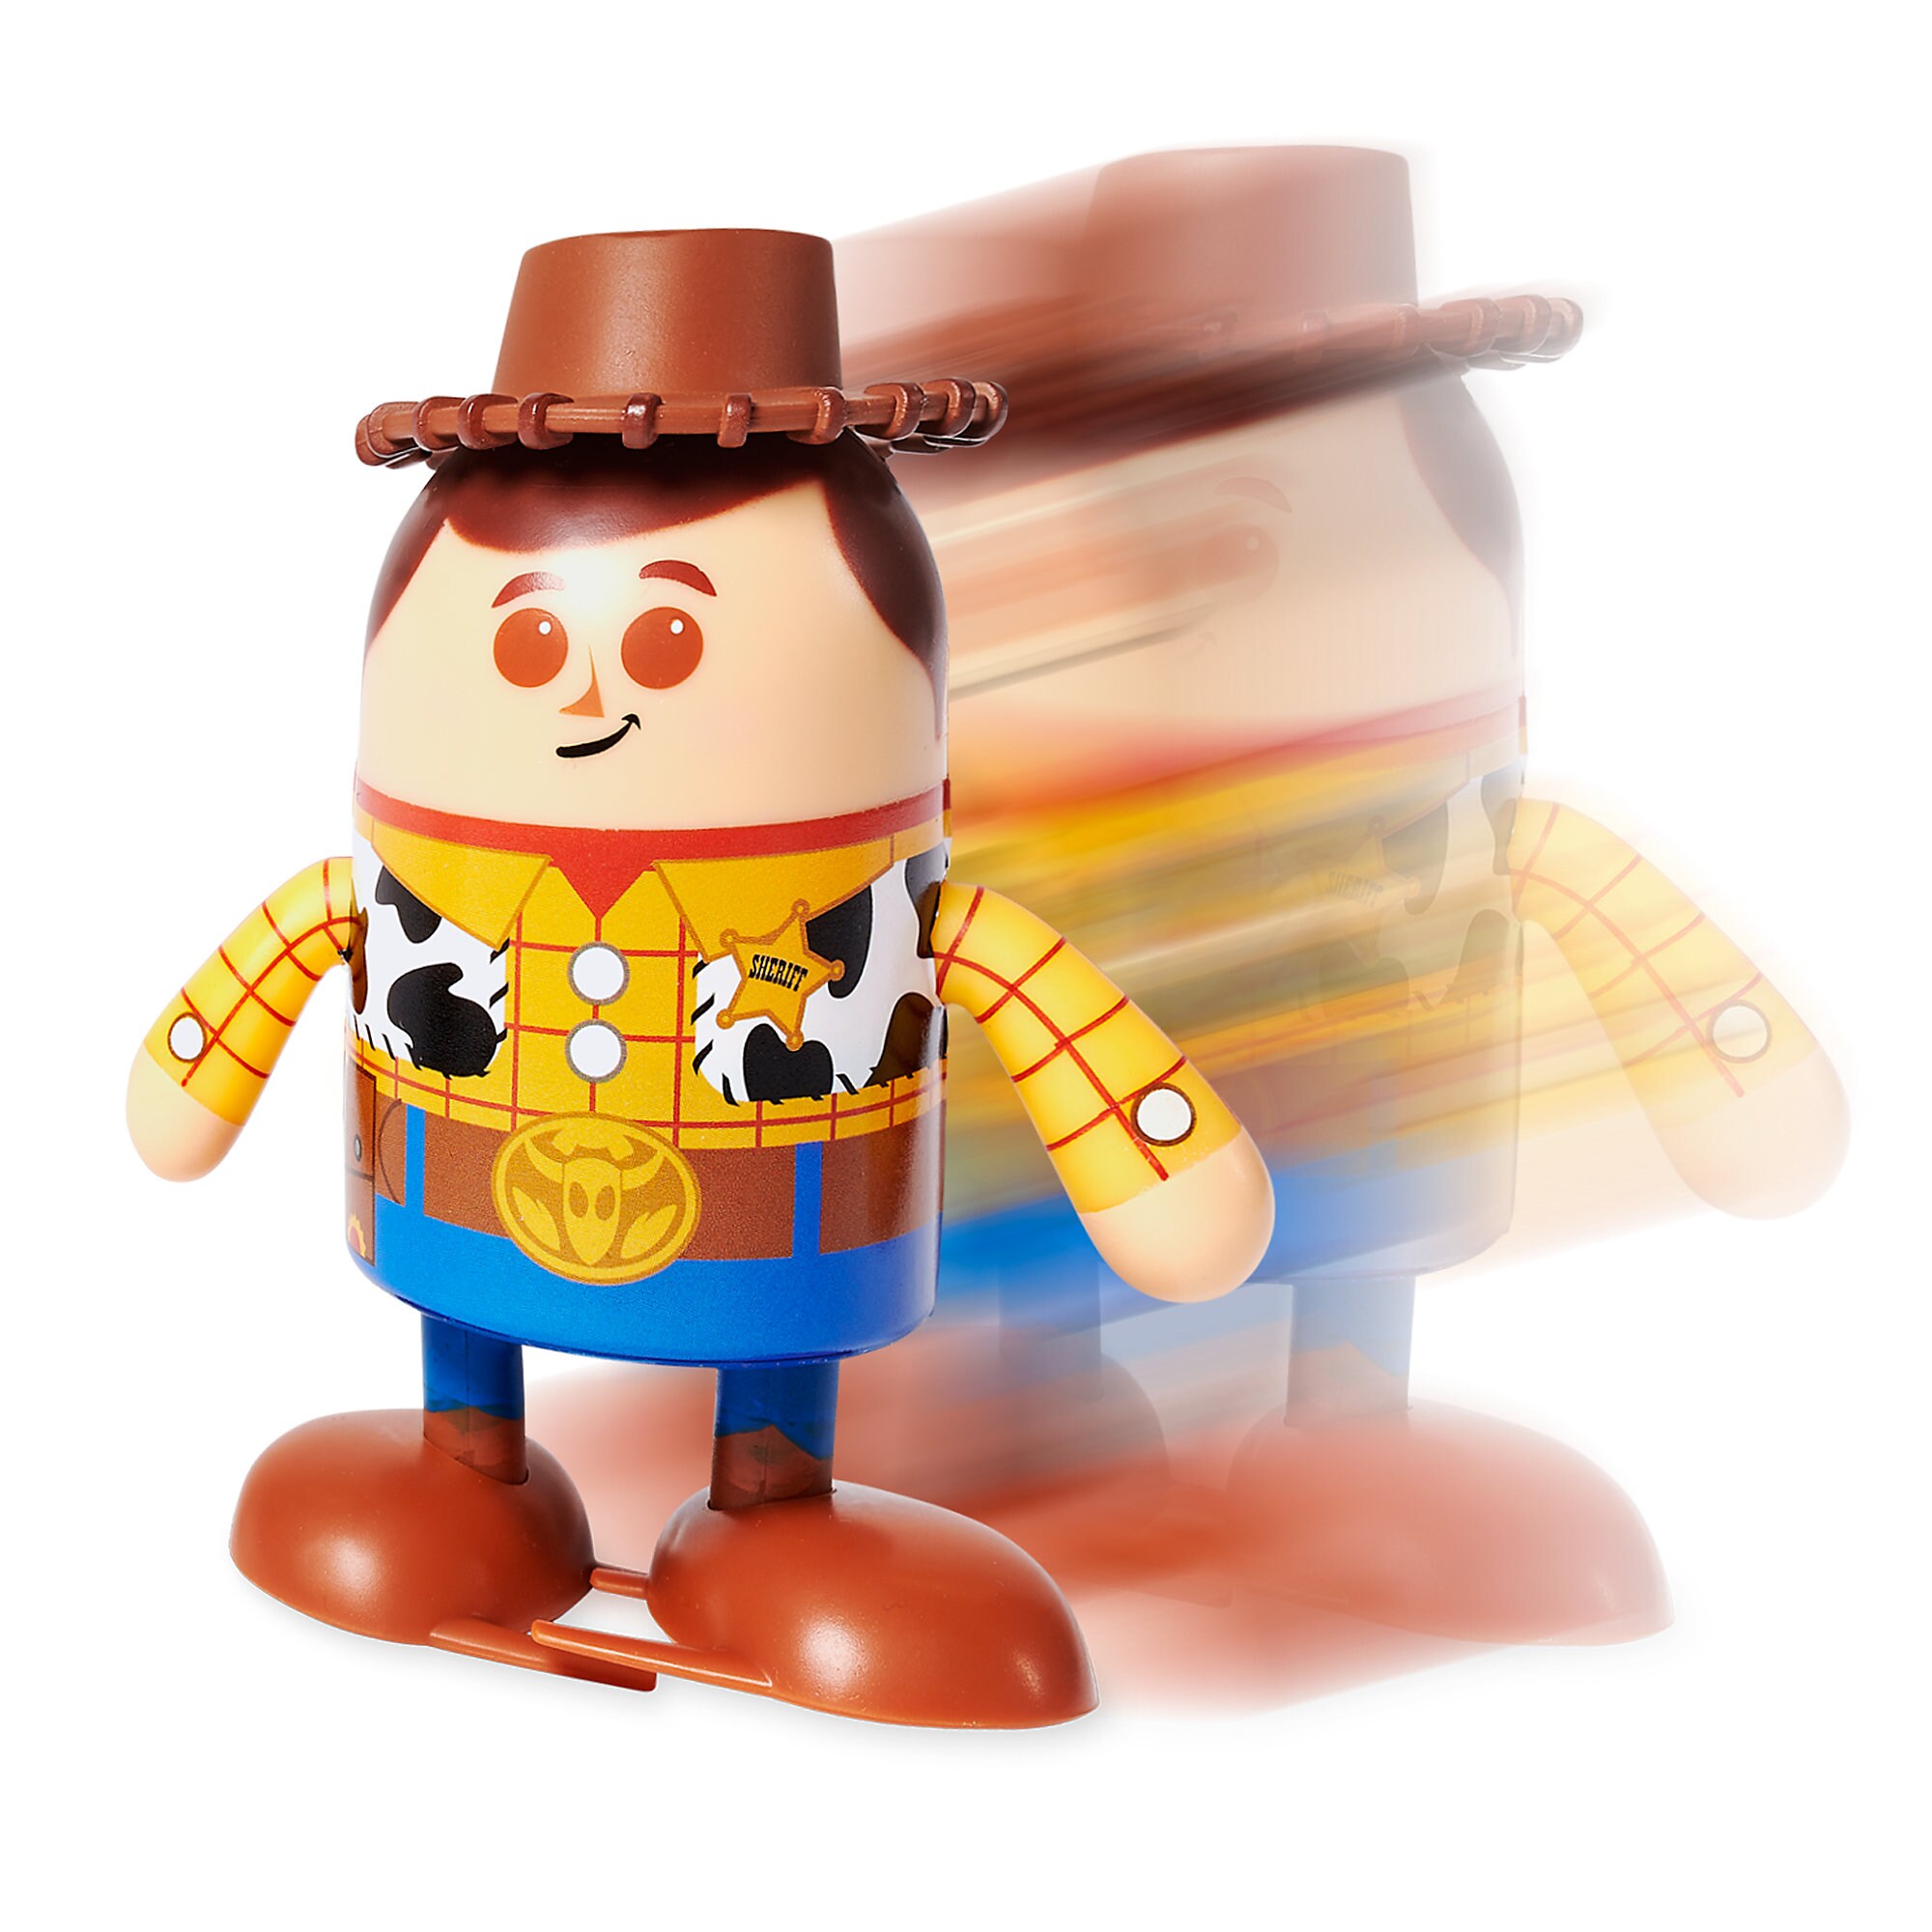 Woody Shufflerz Walking Figure - Toy Story